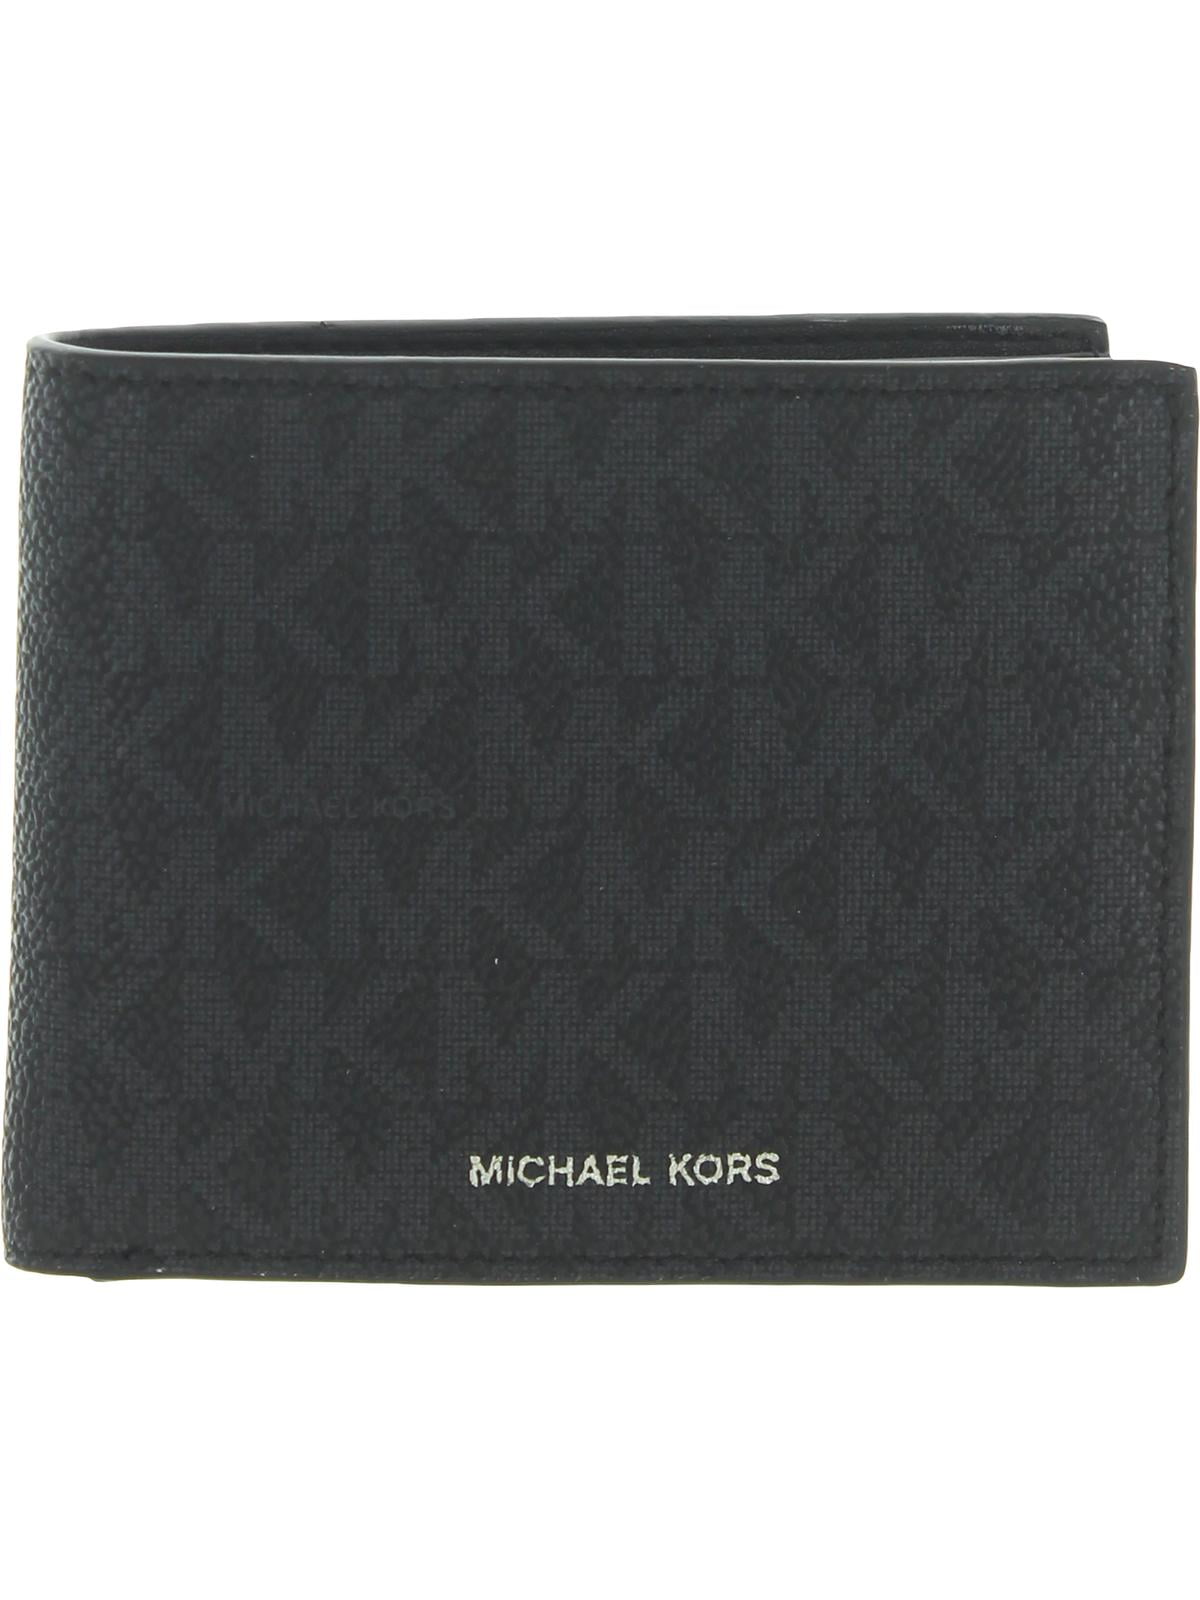 Michael Kors Jet Set Travel Small Zip Card Case Wallet 35F0GTVD2L-001 Black  Gold 